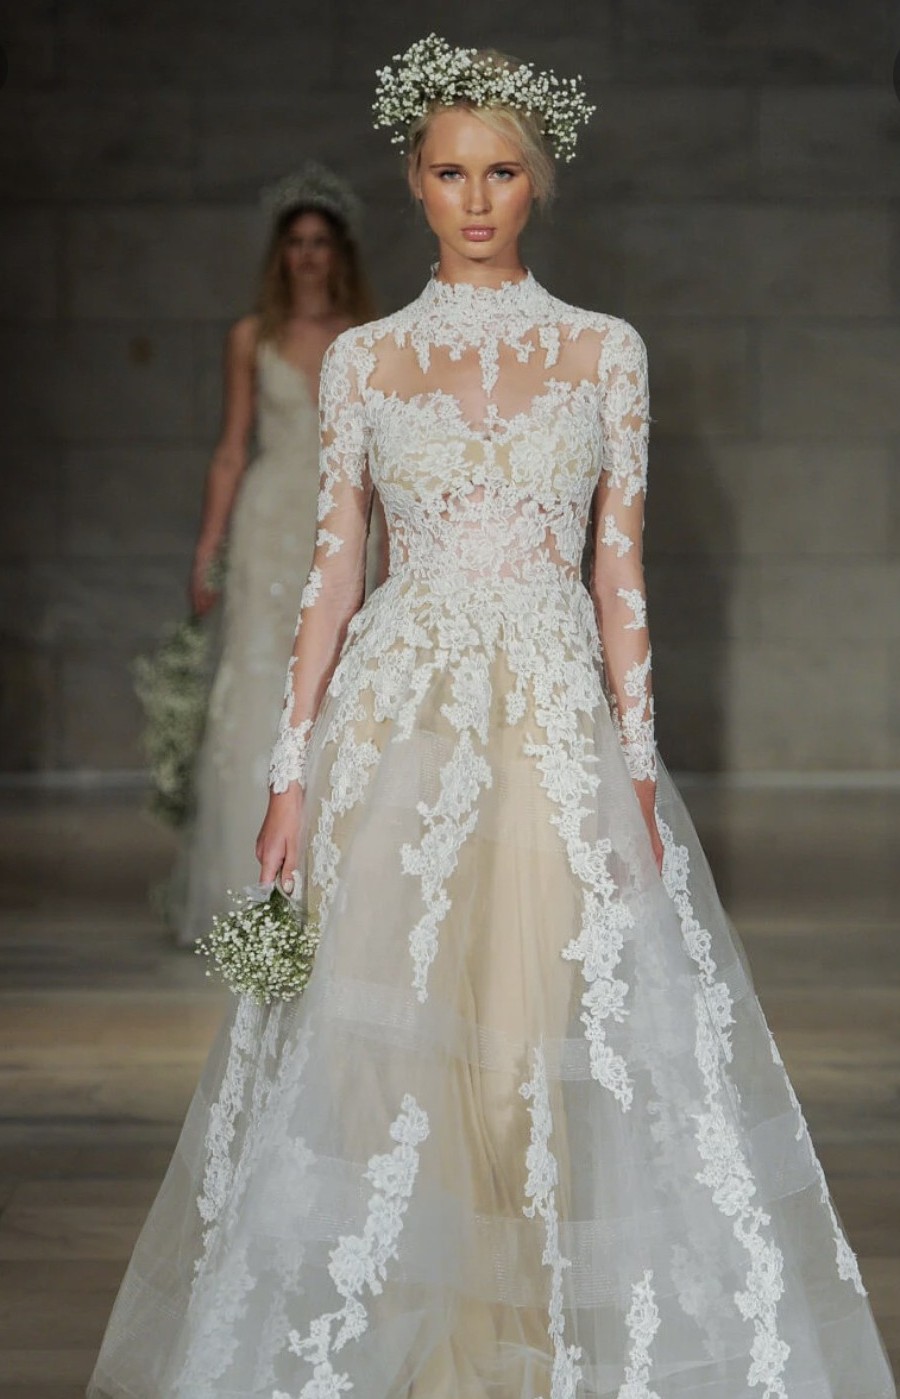 Reem Acra New Wedding Dress Save 55% - Stillwhite